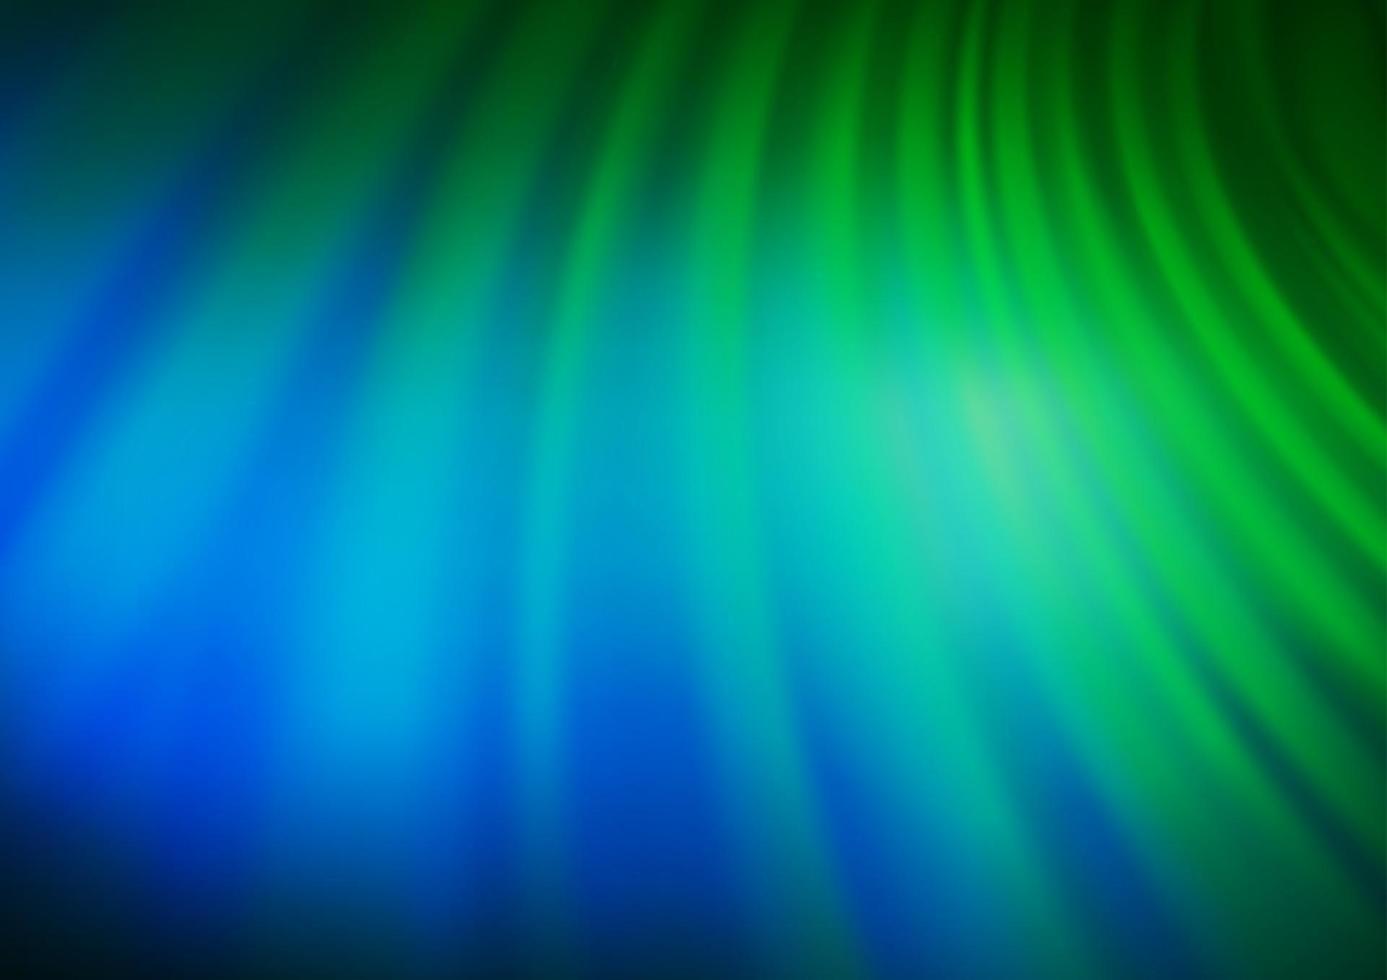 hellblauer, grüner Vektor verschwommenes helles Muster.